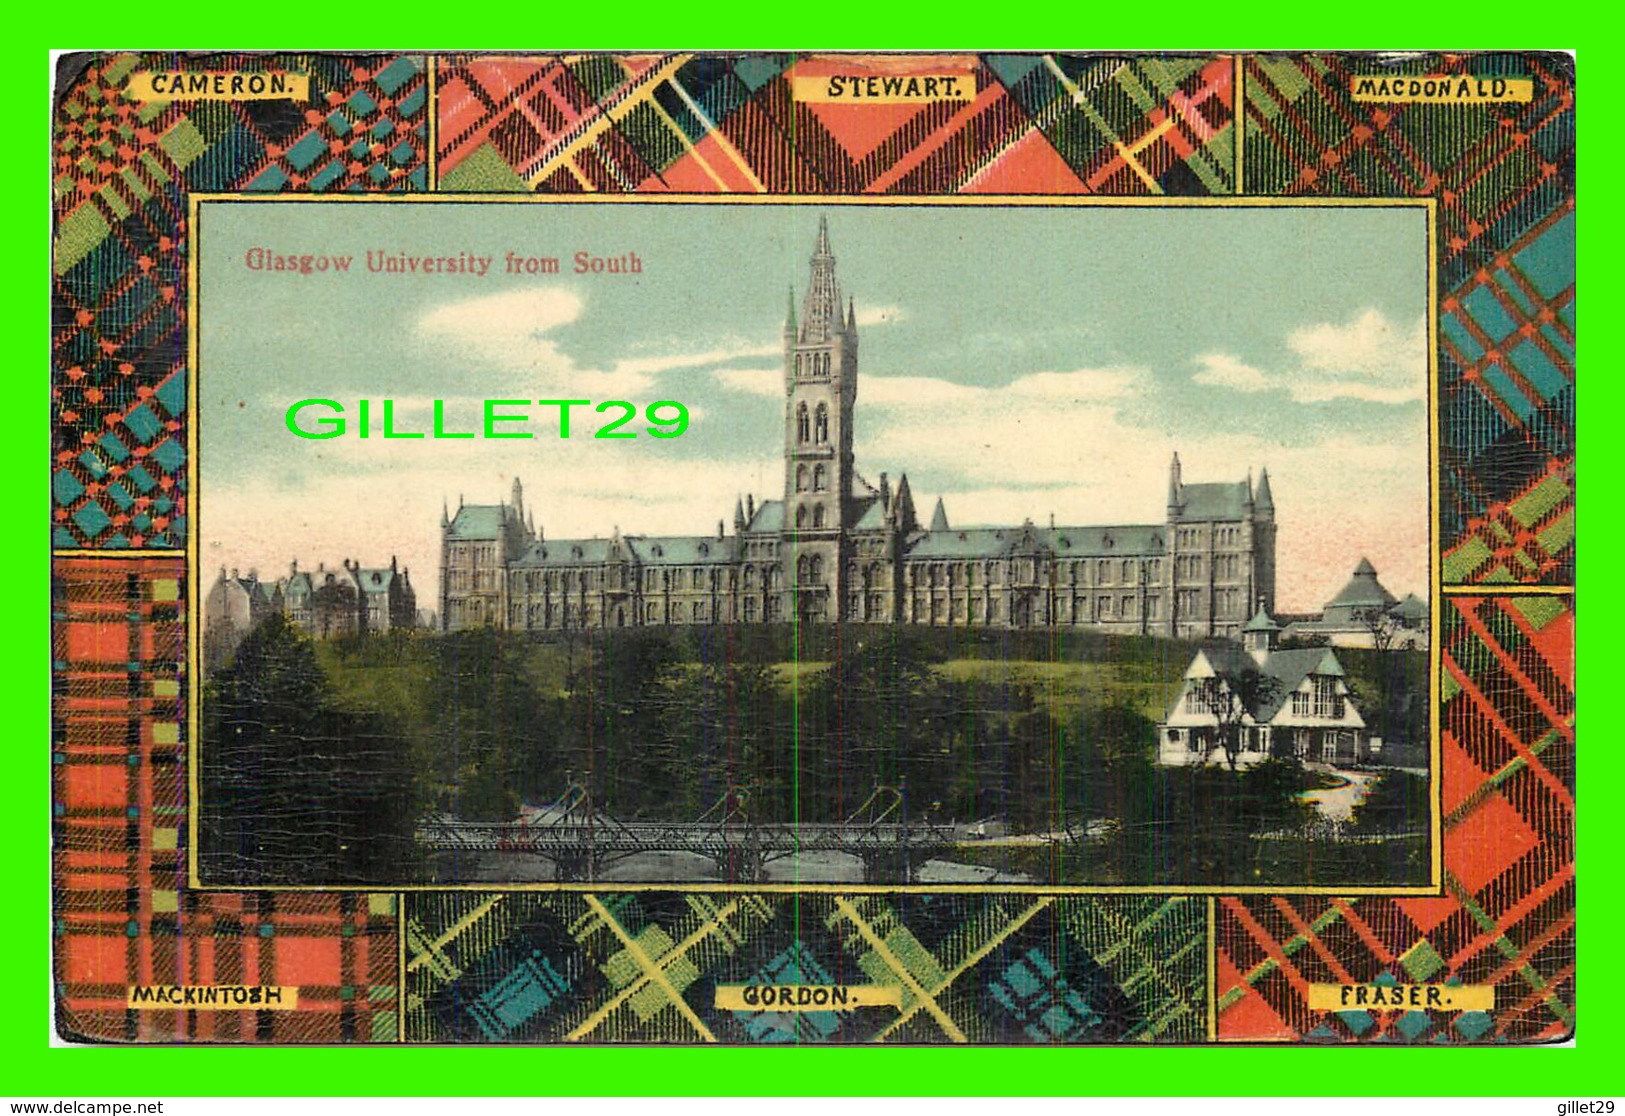 GLASGOW, SCOTLAND - UNIVERSITY FROM THE SOUTH - TRAVEL IN 1907 - THE MILTON GLAZETTE SERIES - - Lanarkshire / Glasgow